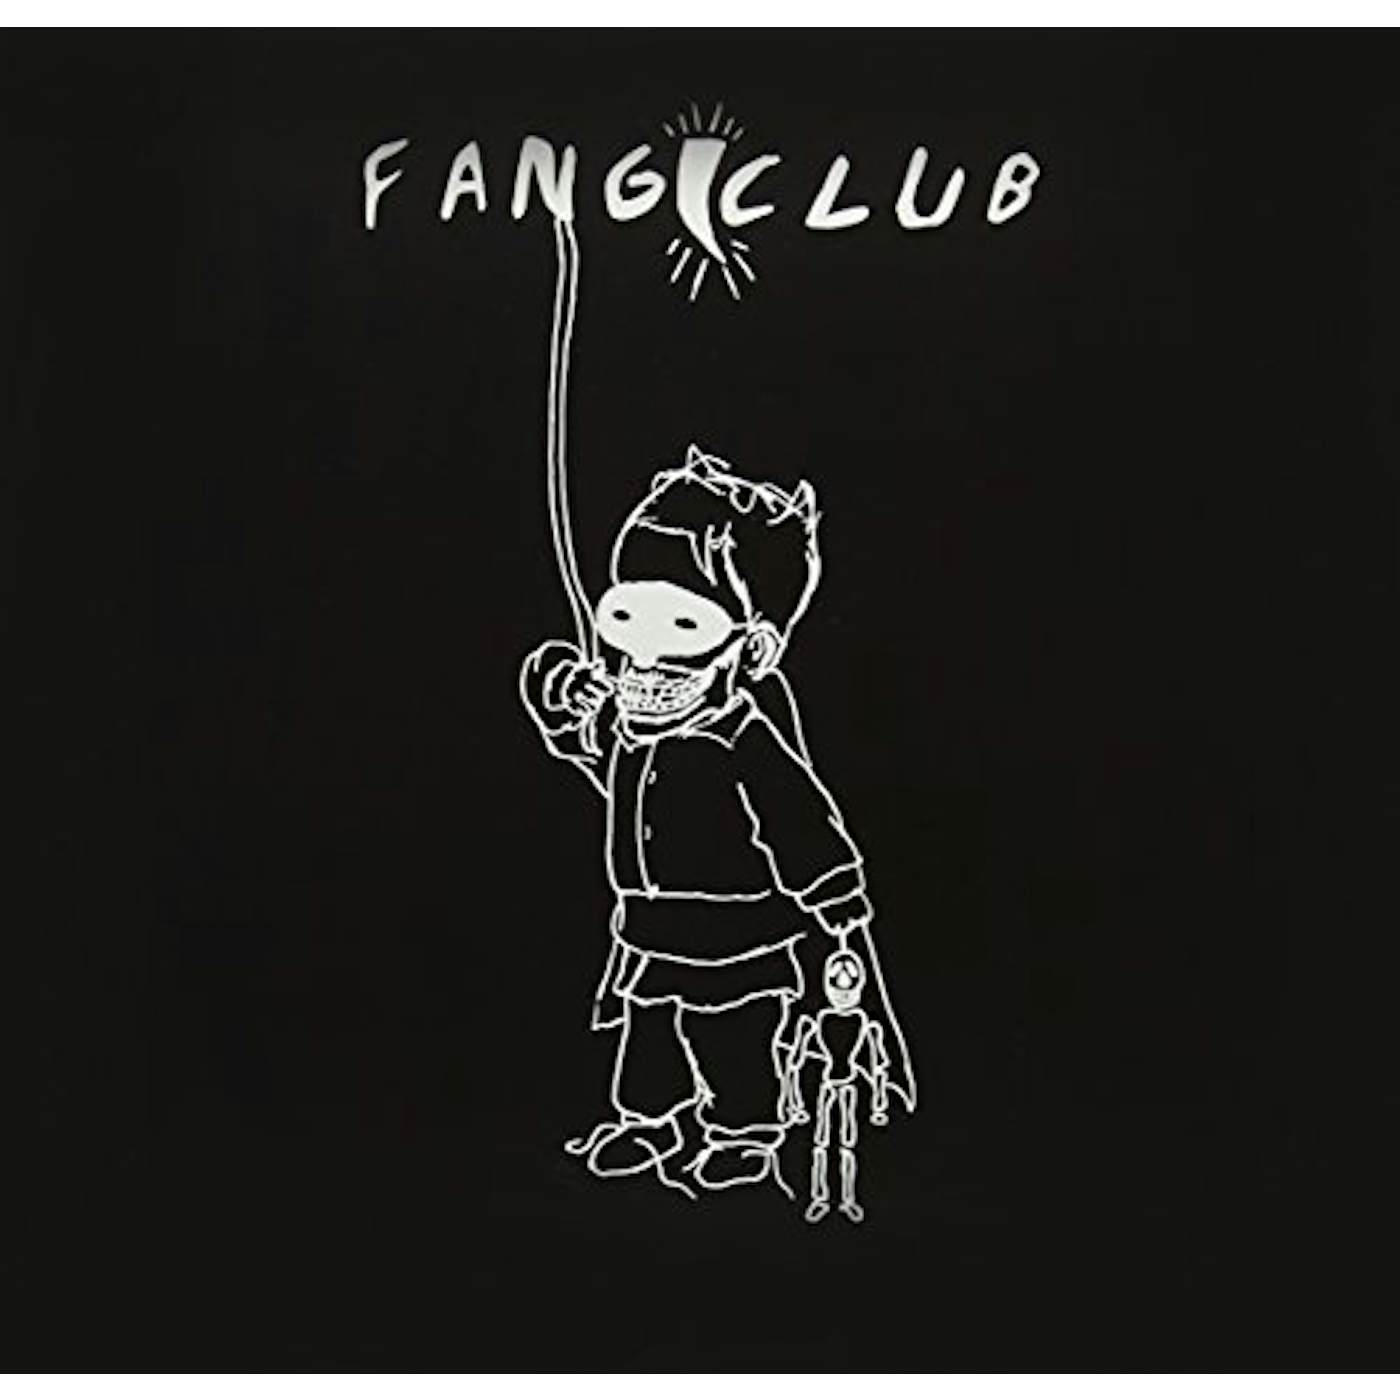 Fangclub Vinyl Record